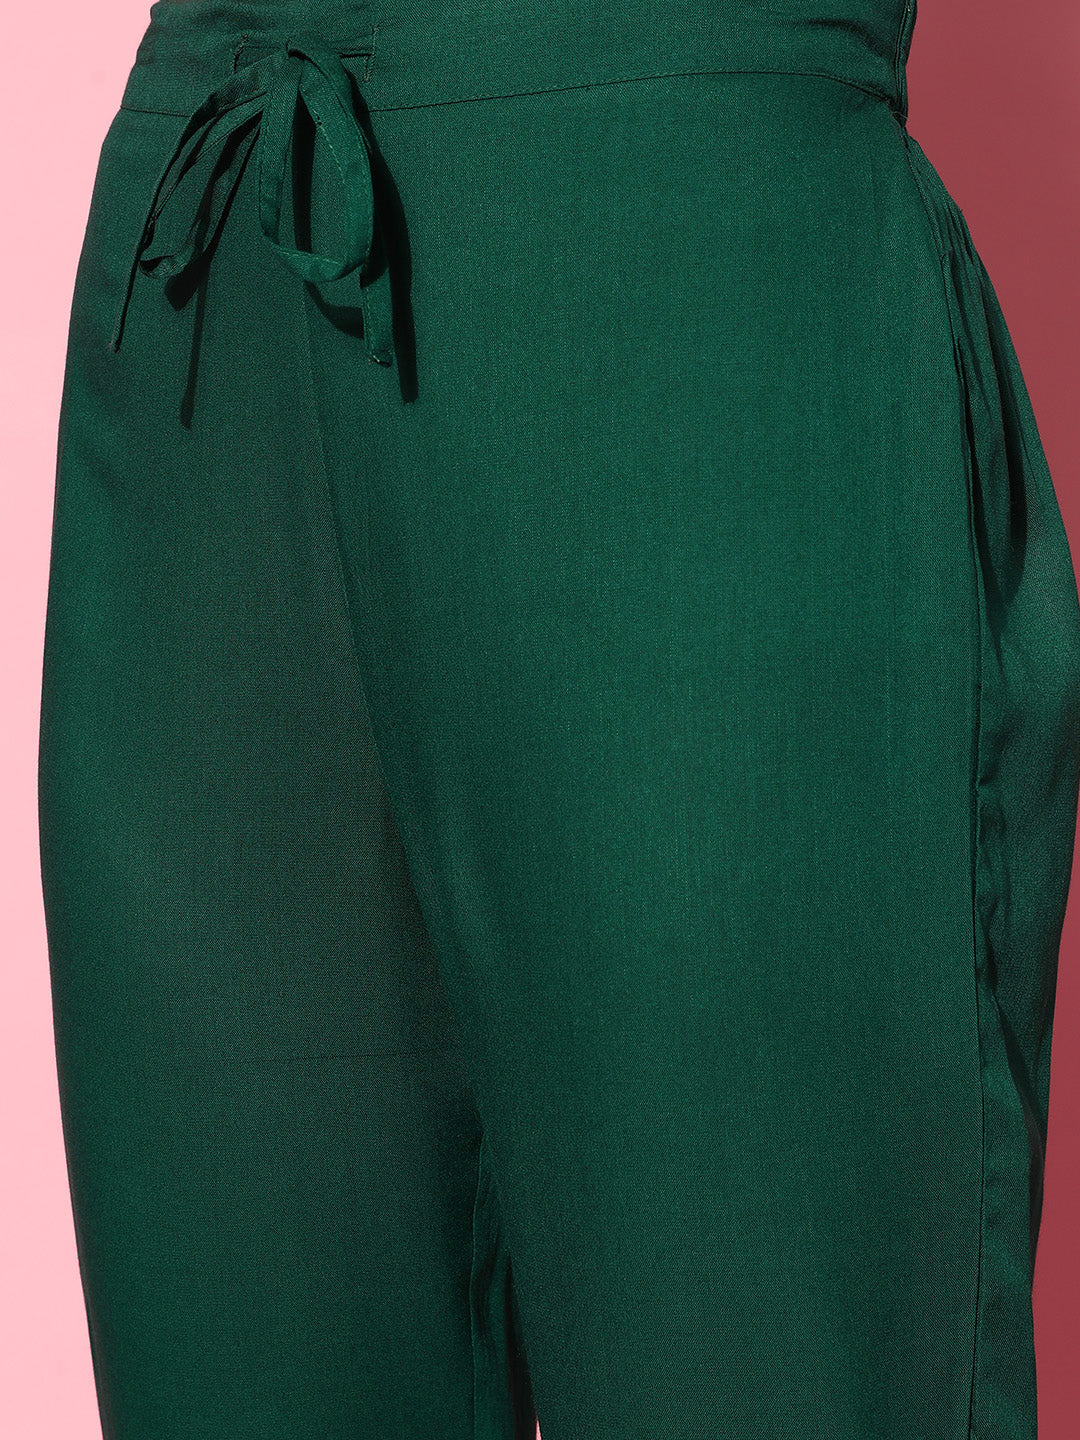 Ishin Women's Rayon Green Foil Printed A-Line Kurta Trouser Dupatta Set